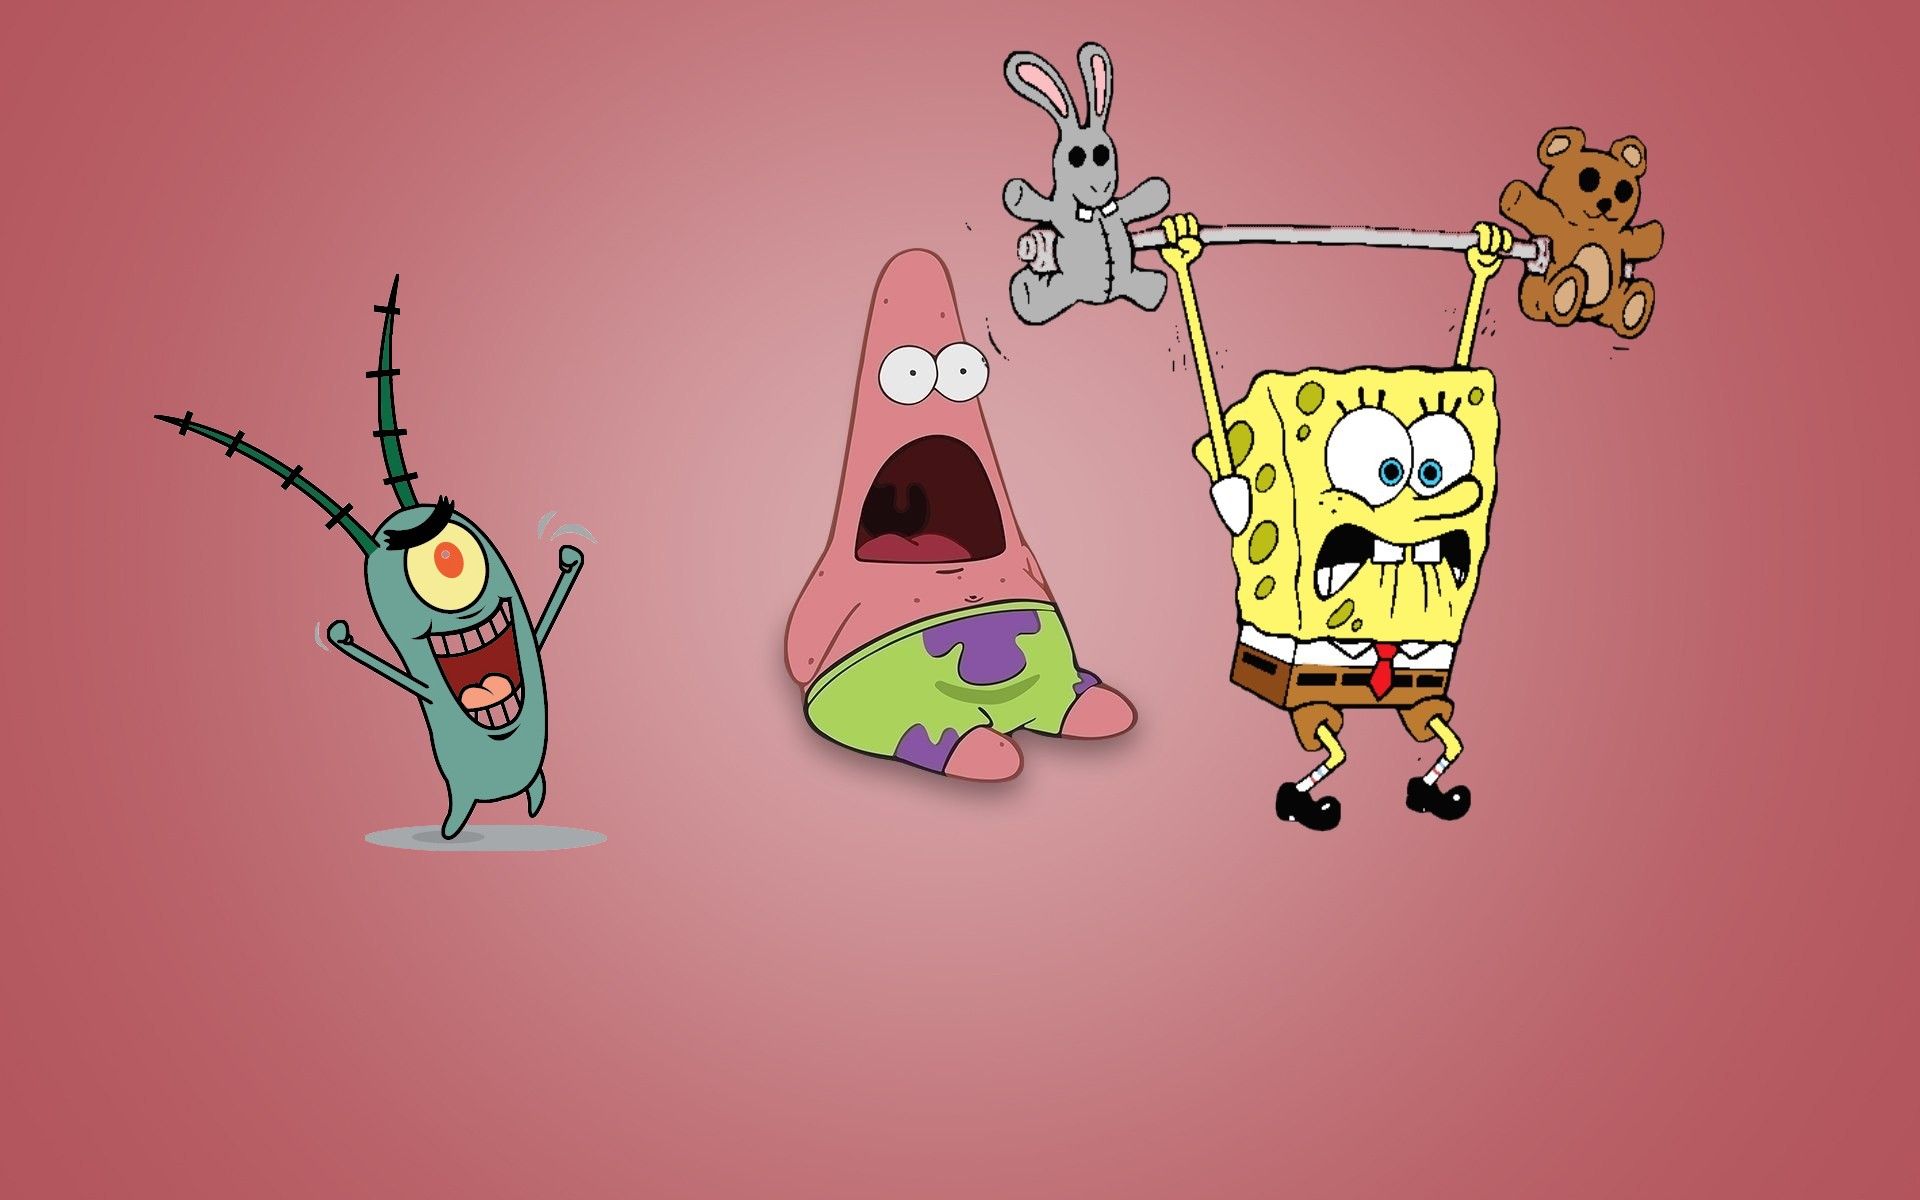 spongebob squarepants